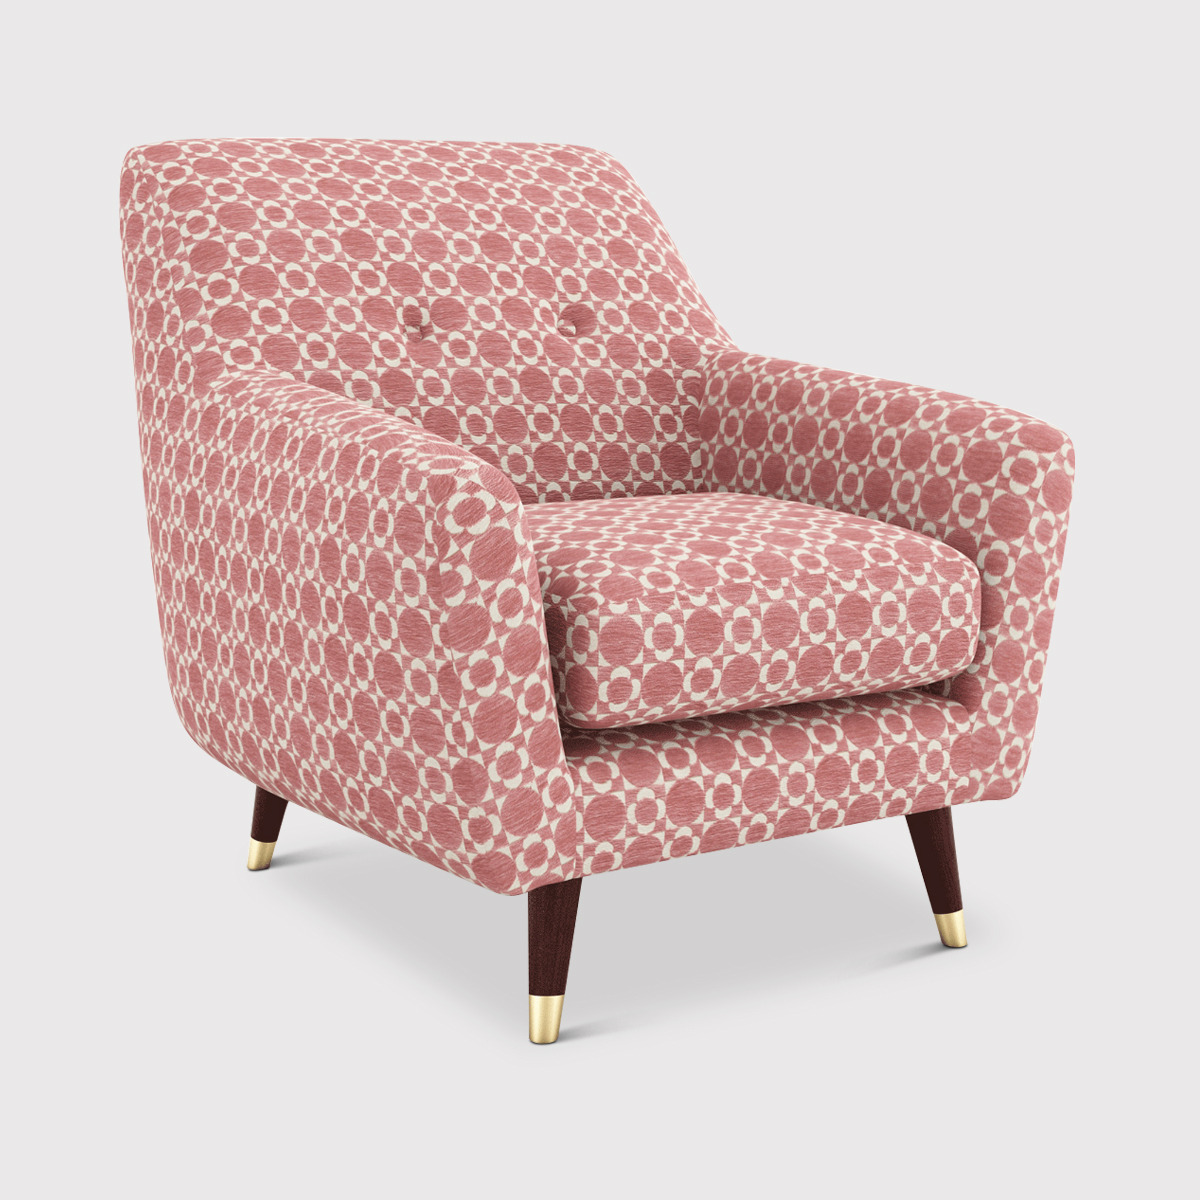 Orla Kiely Rose Armchair, Pink Fabric - Barker & Stonehouse - image 1